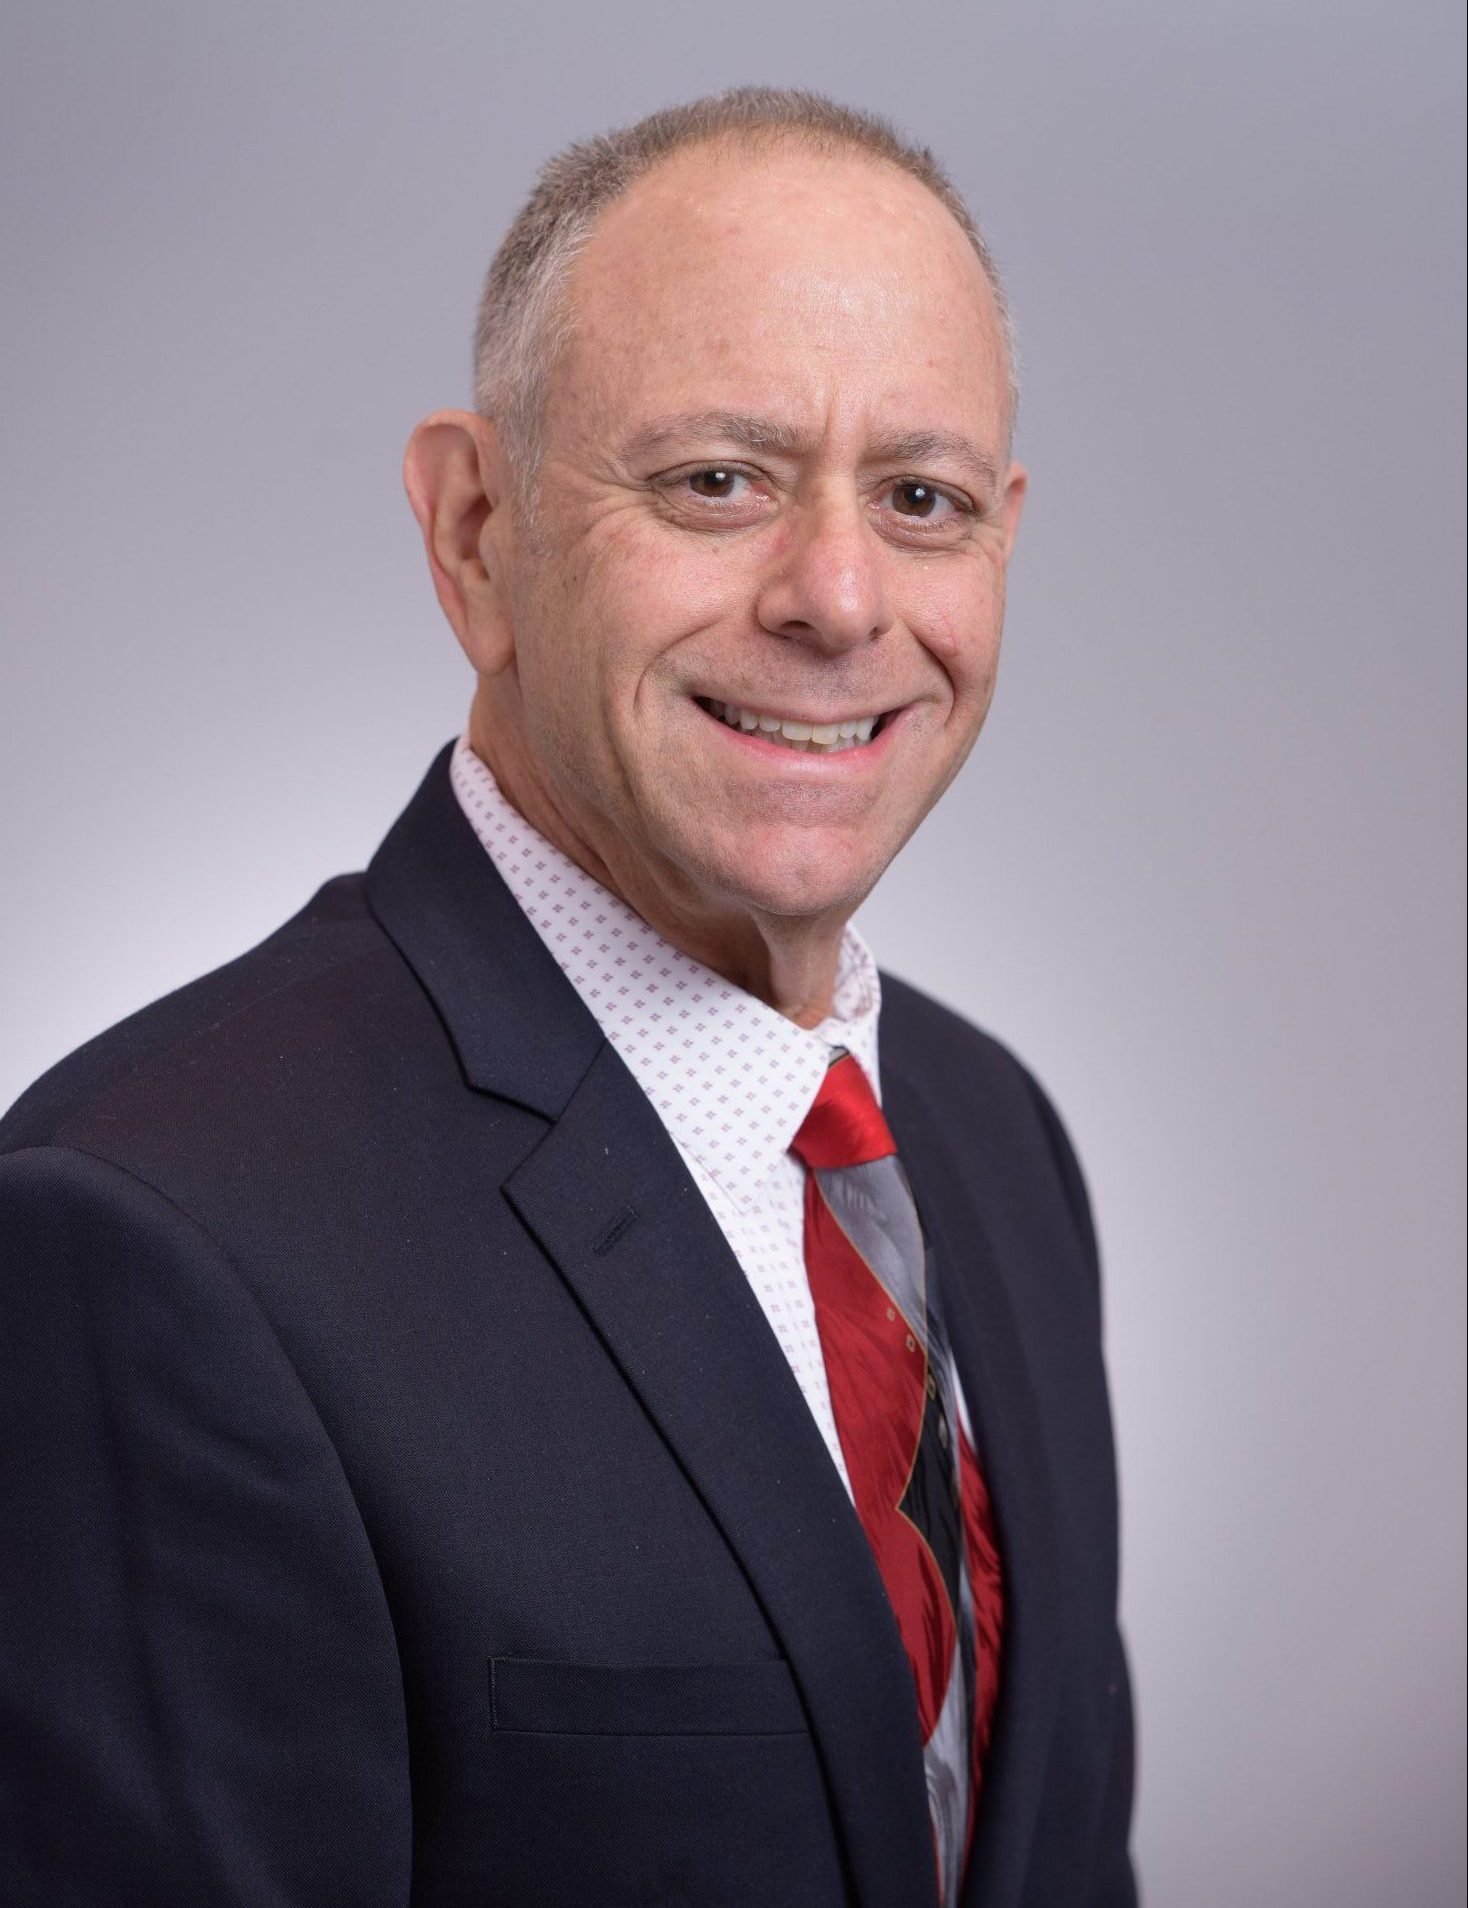 Dr. Rubinoff Craig H. Rubinoff, DDS, MS